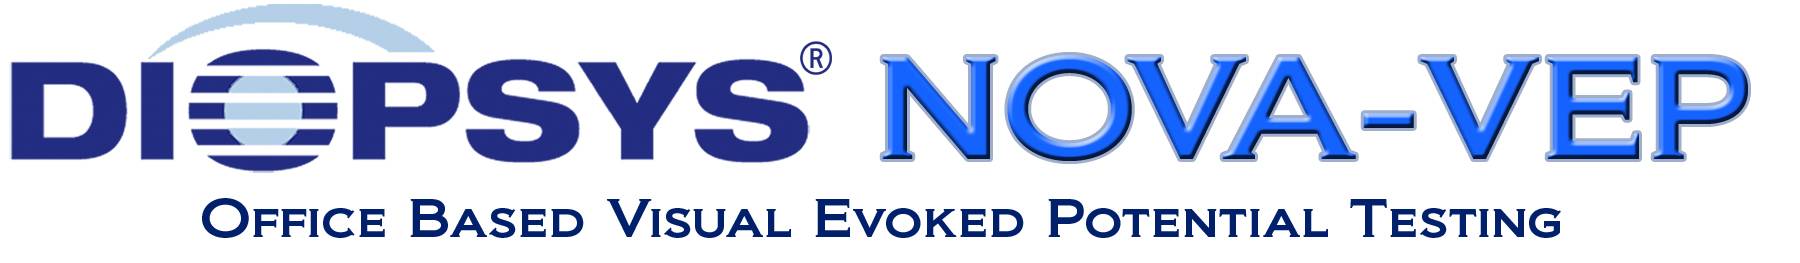 Diopsys NOVA VEP Logo